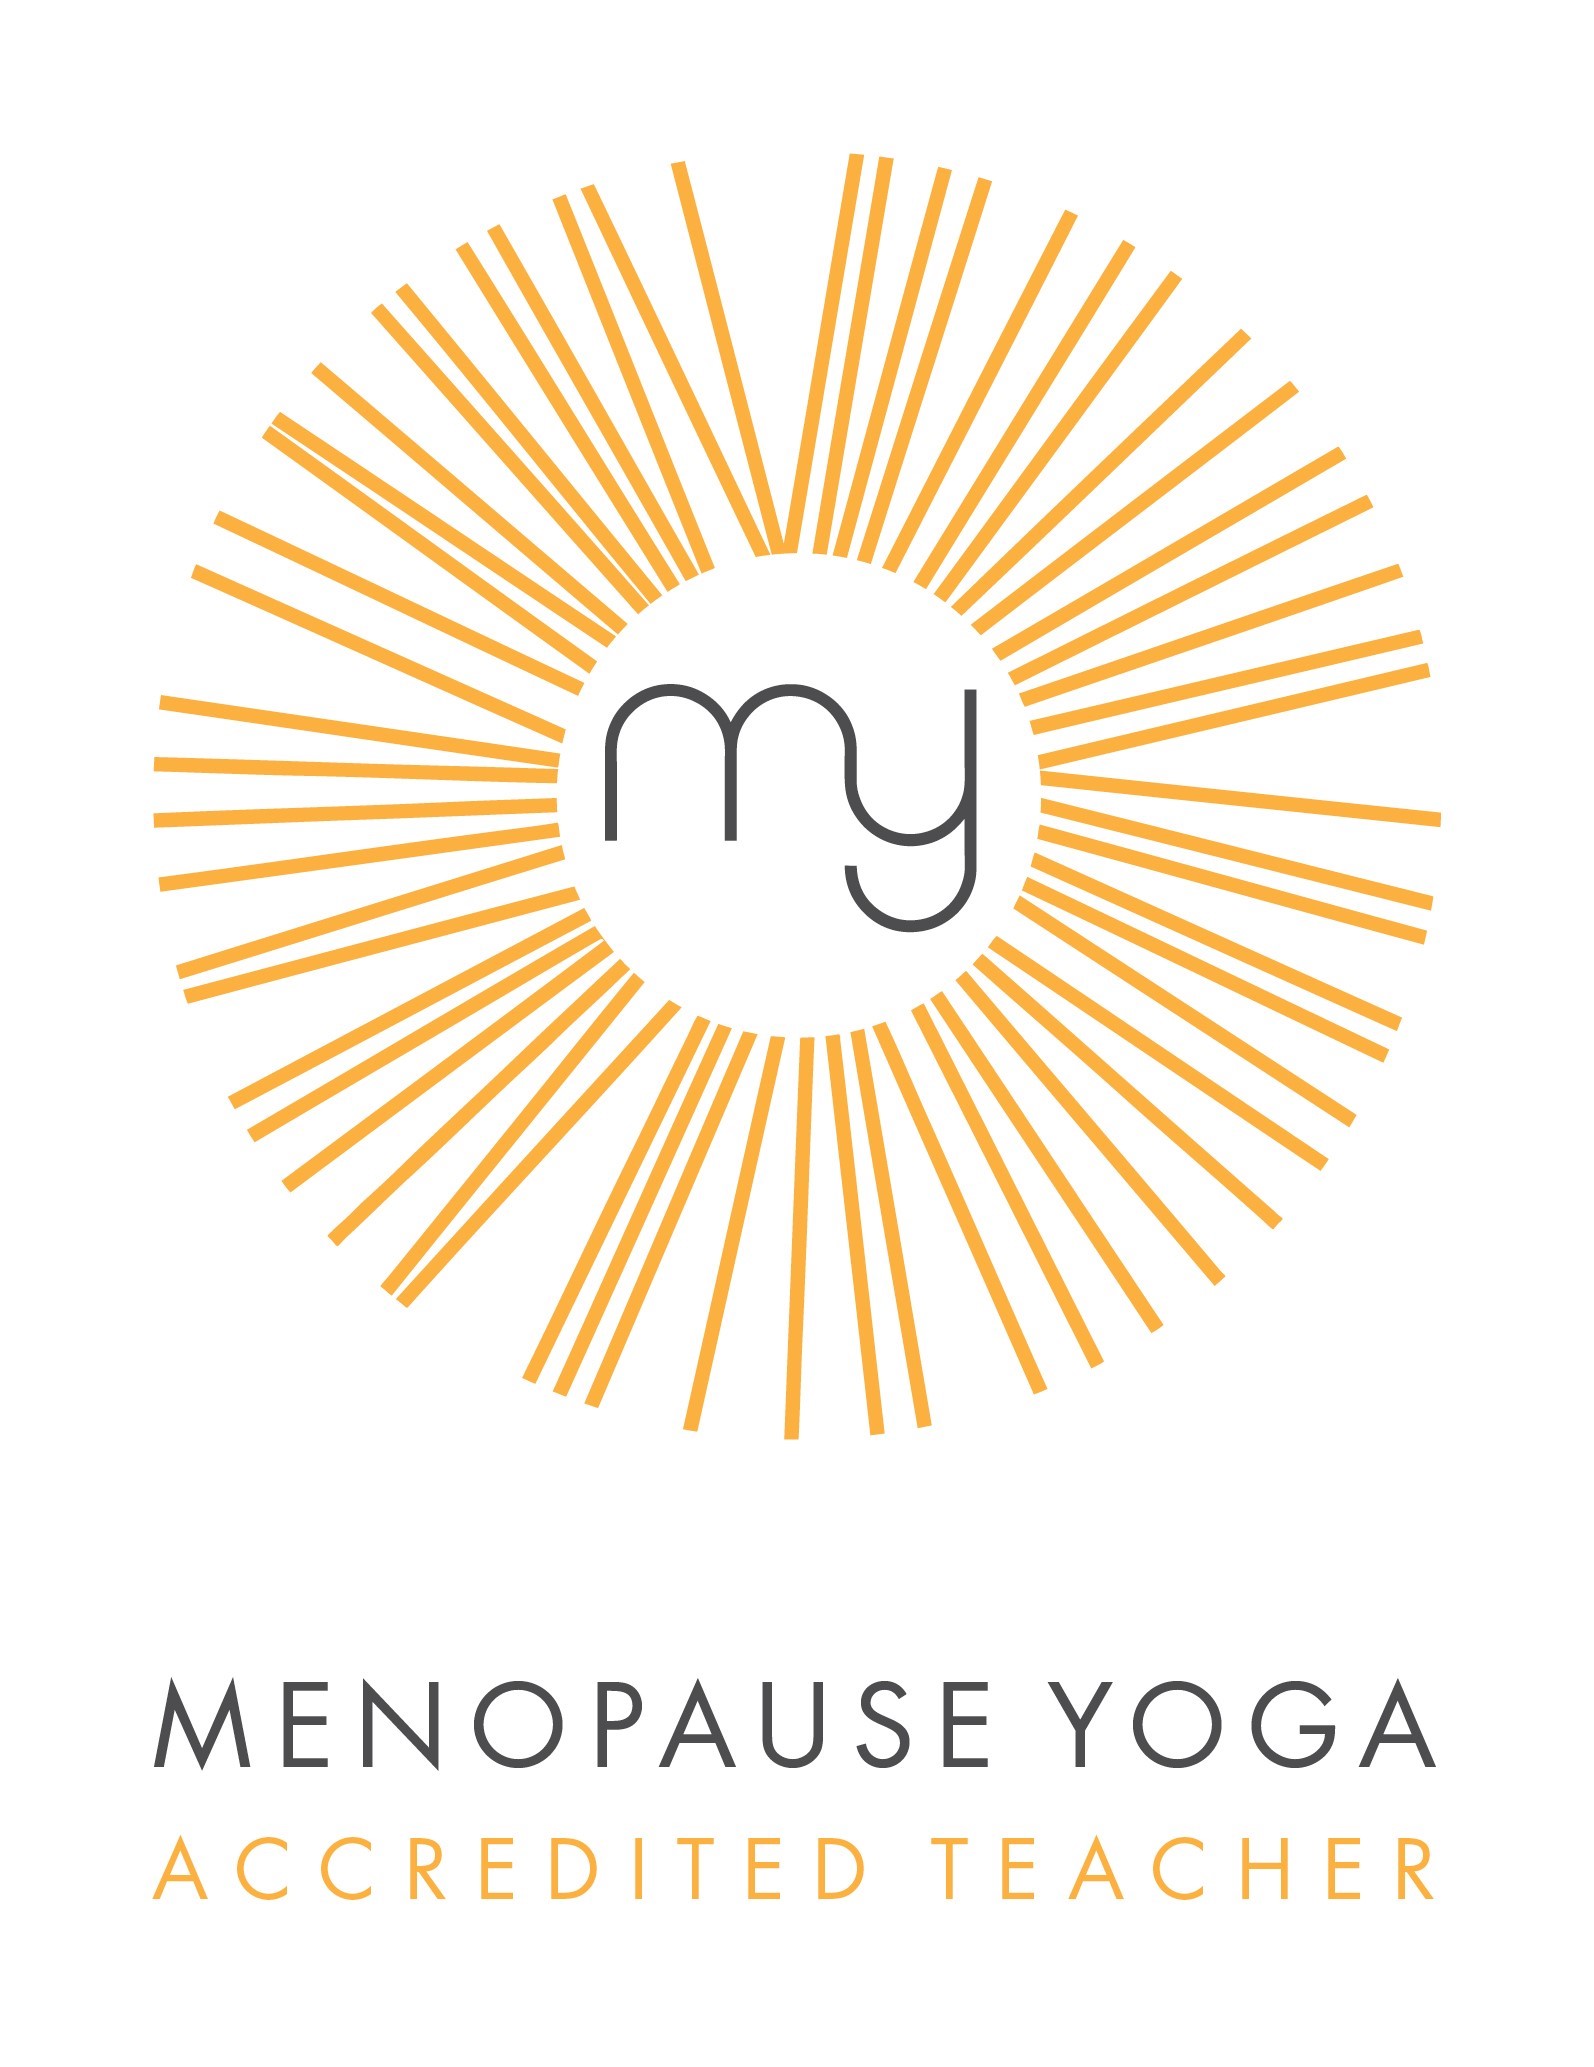 Accredited Menopause Yoga Teacher